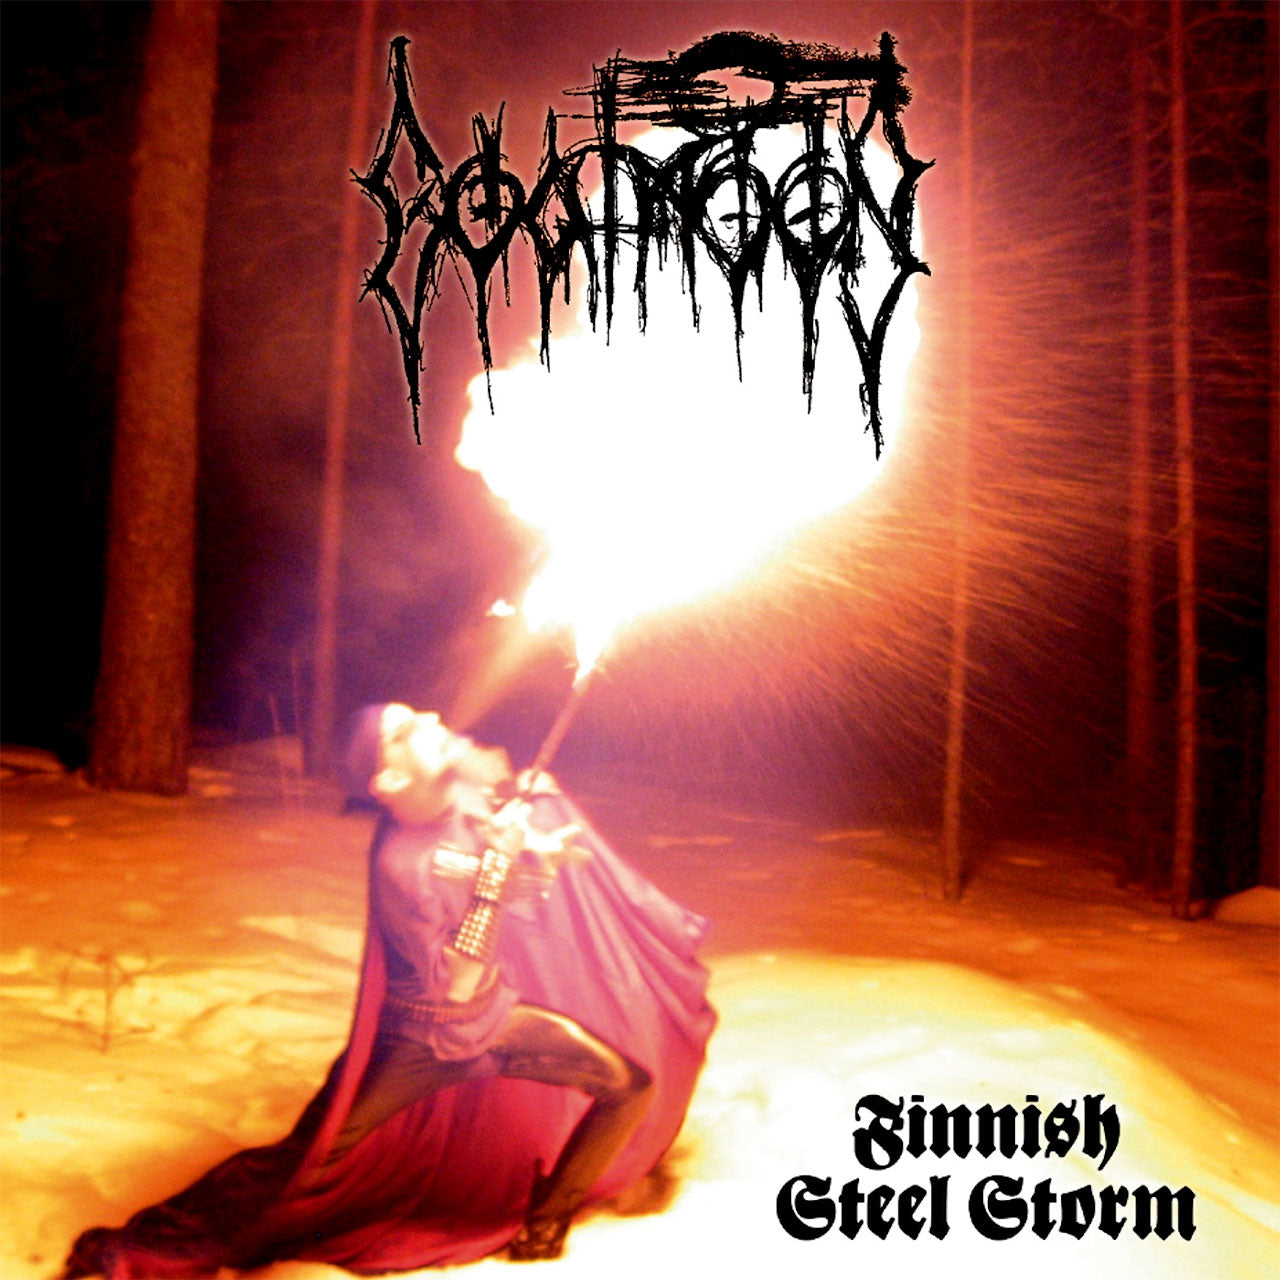 Goatmoon - Finnish Steel Storm (2018 Reissue) (CD)